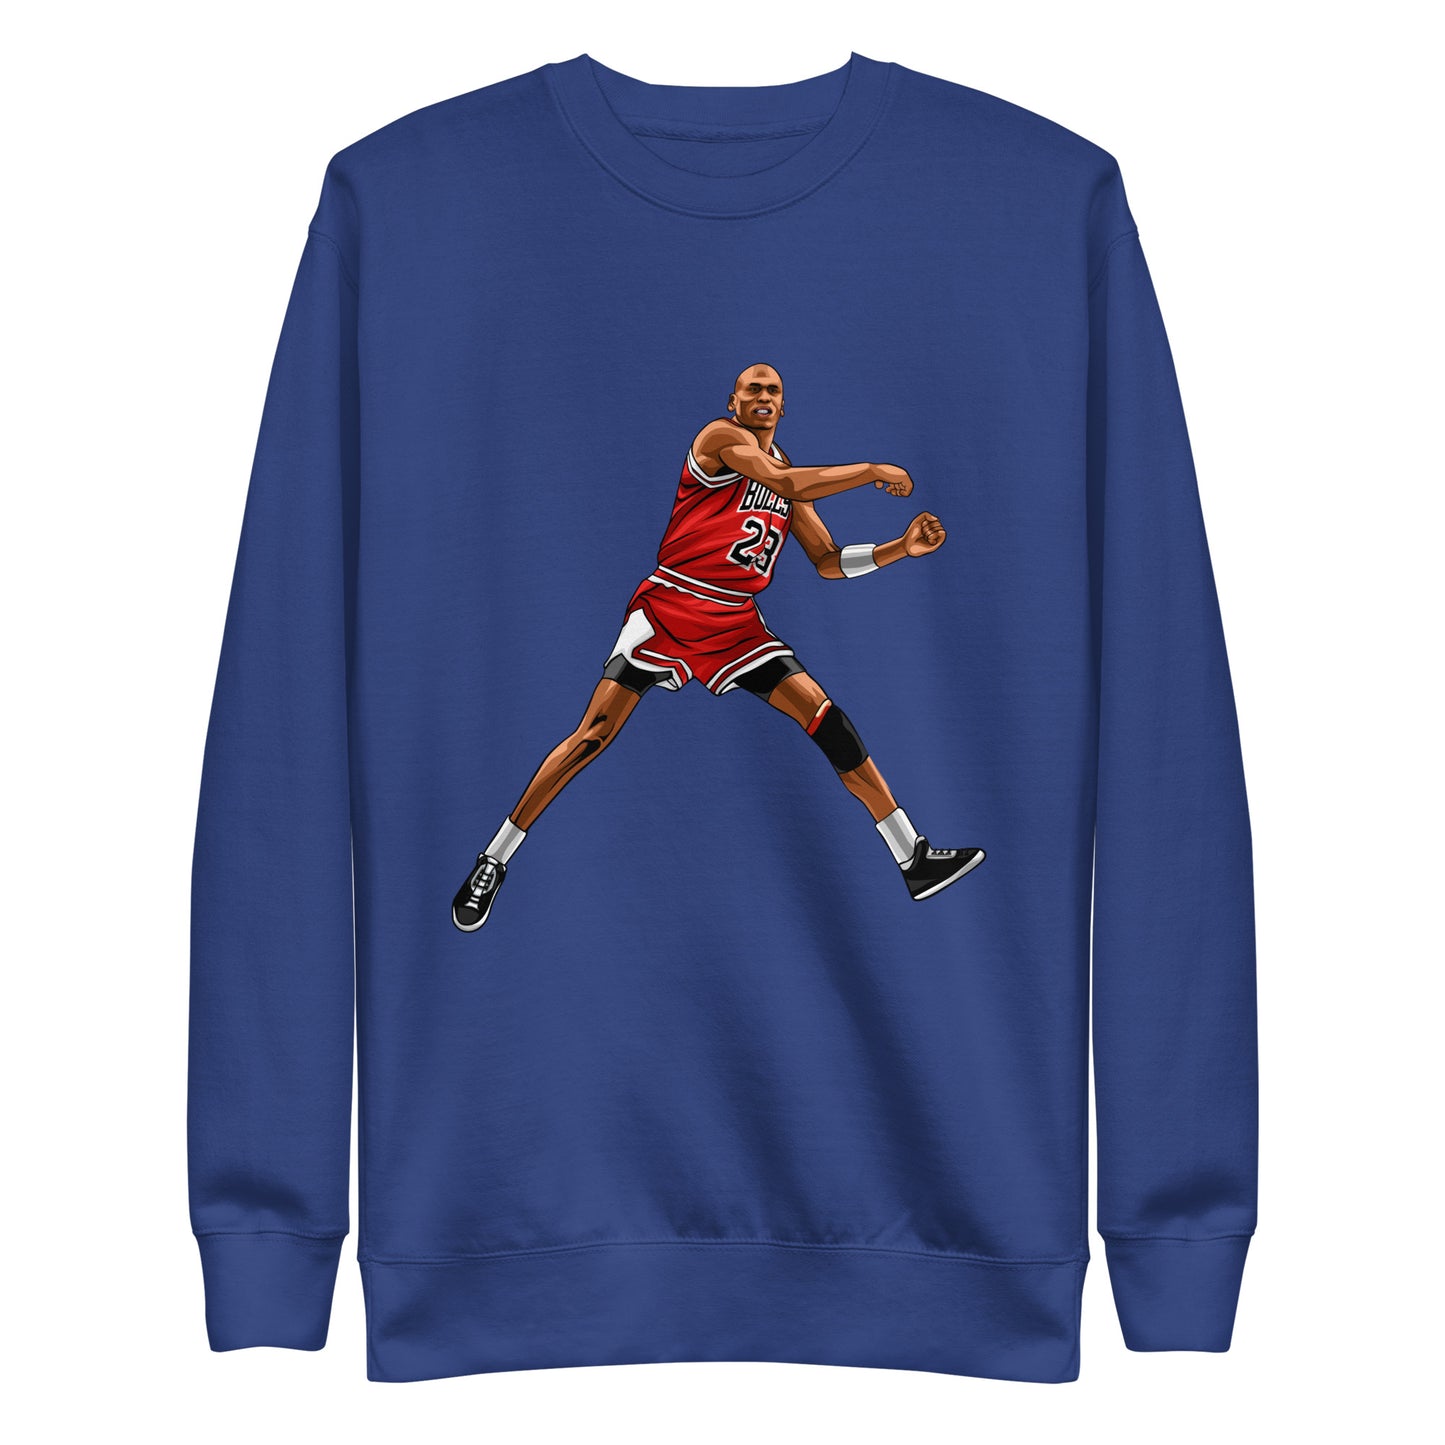 Michael Jordan - "The Shot" sweatshirt